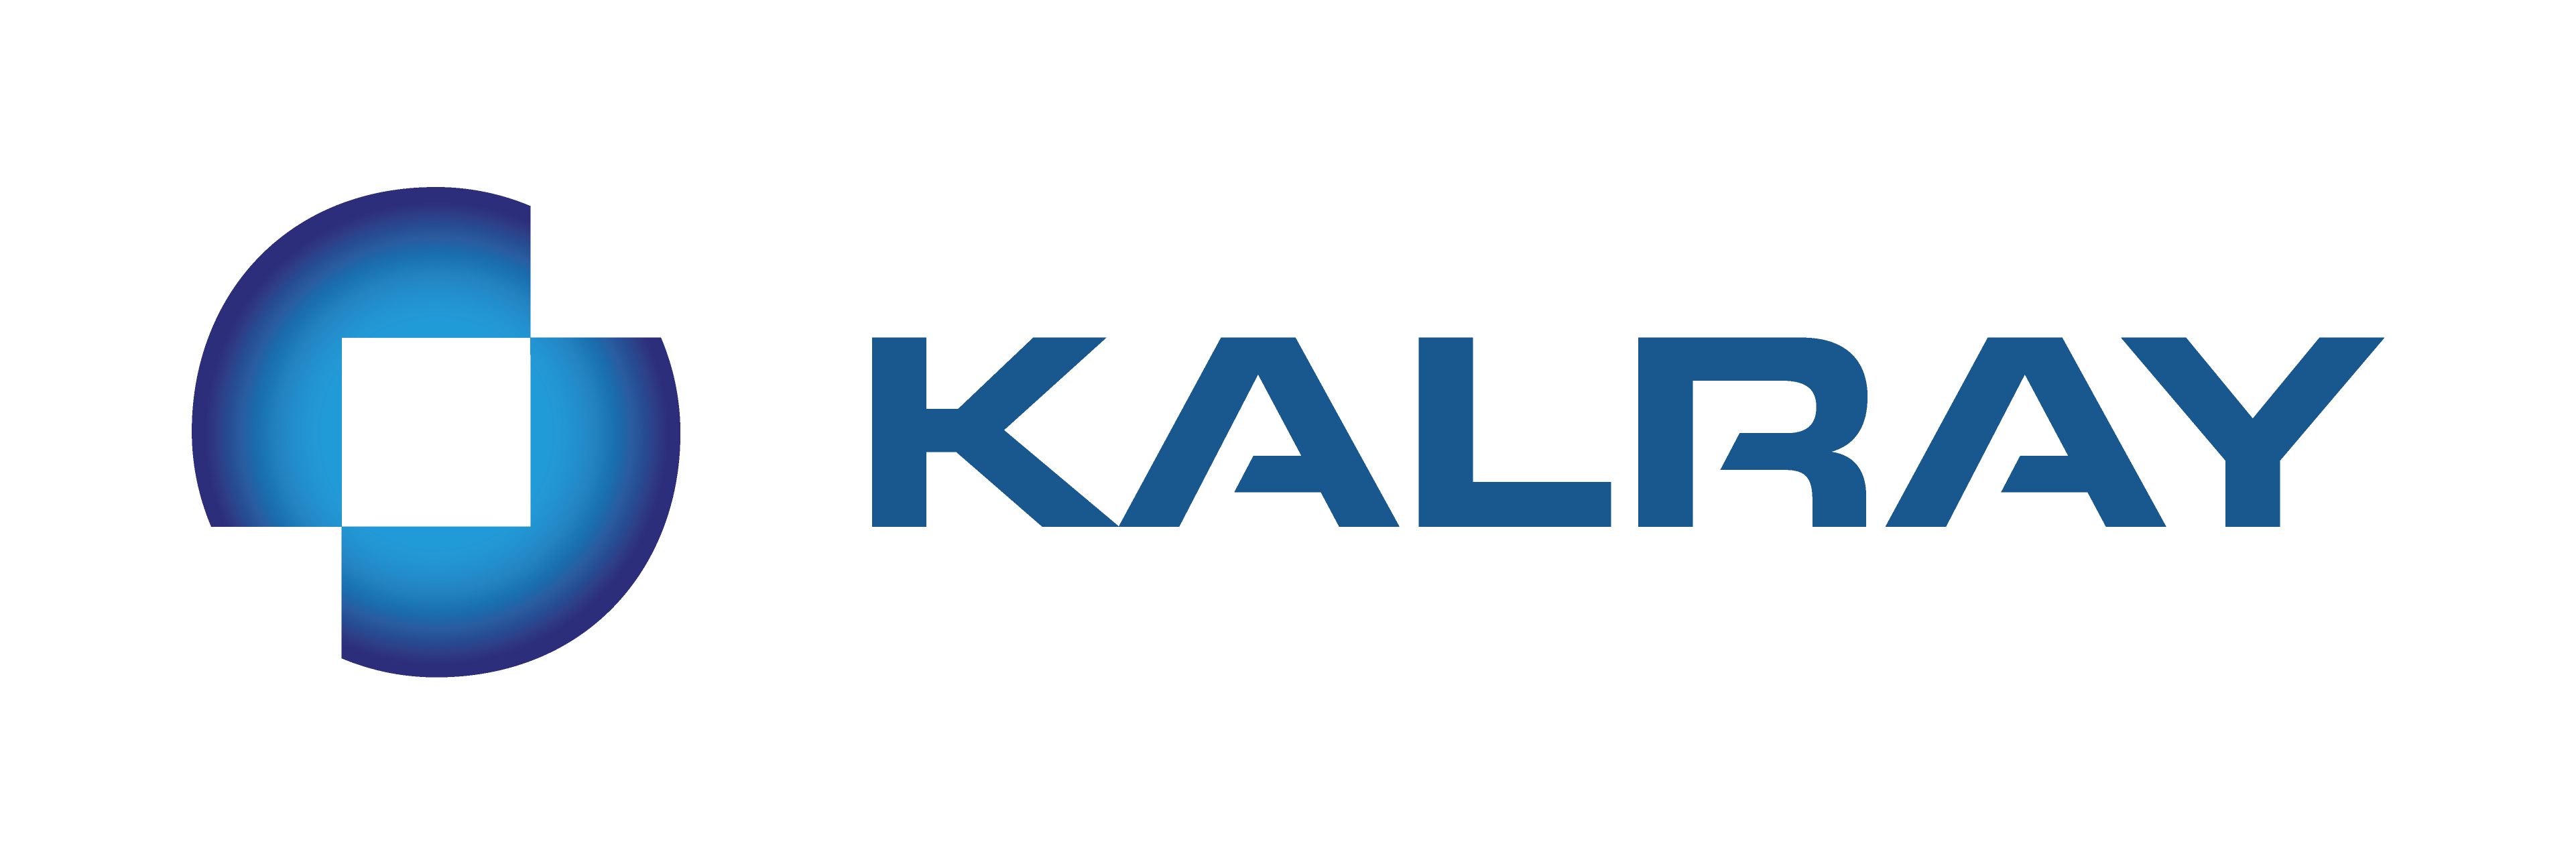 KALRAY - Color Logo (300 dpi).png